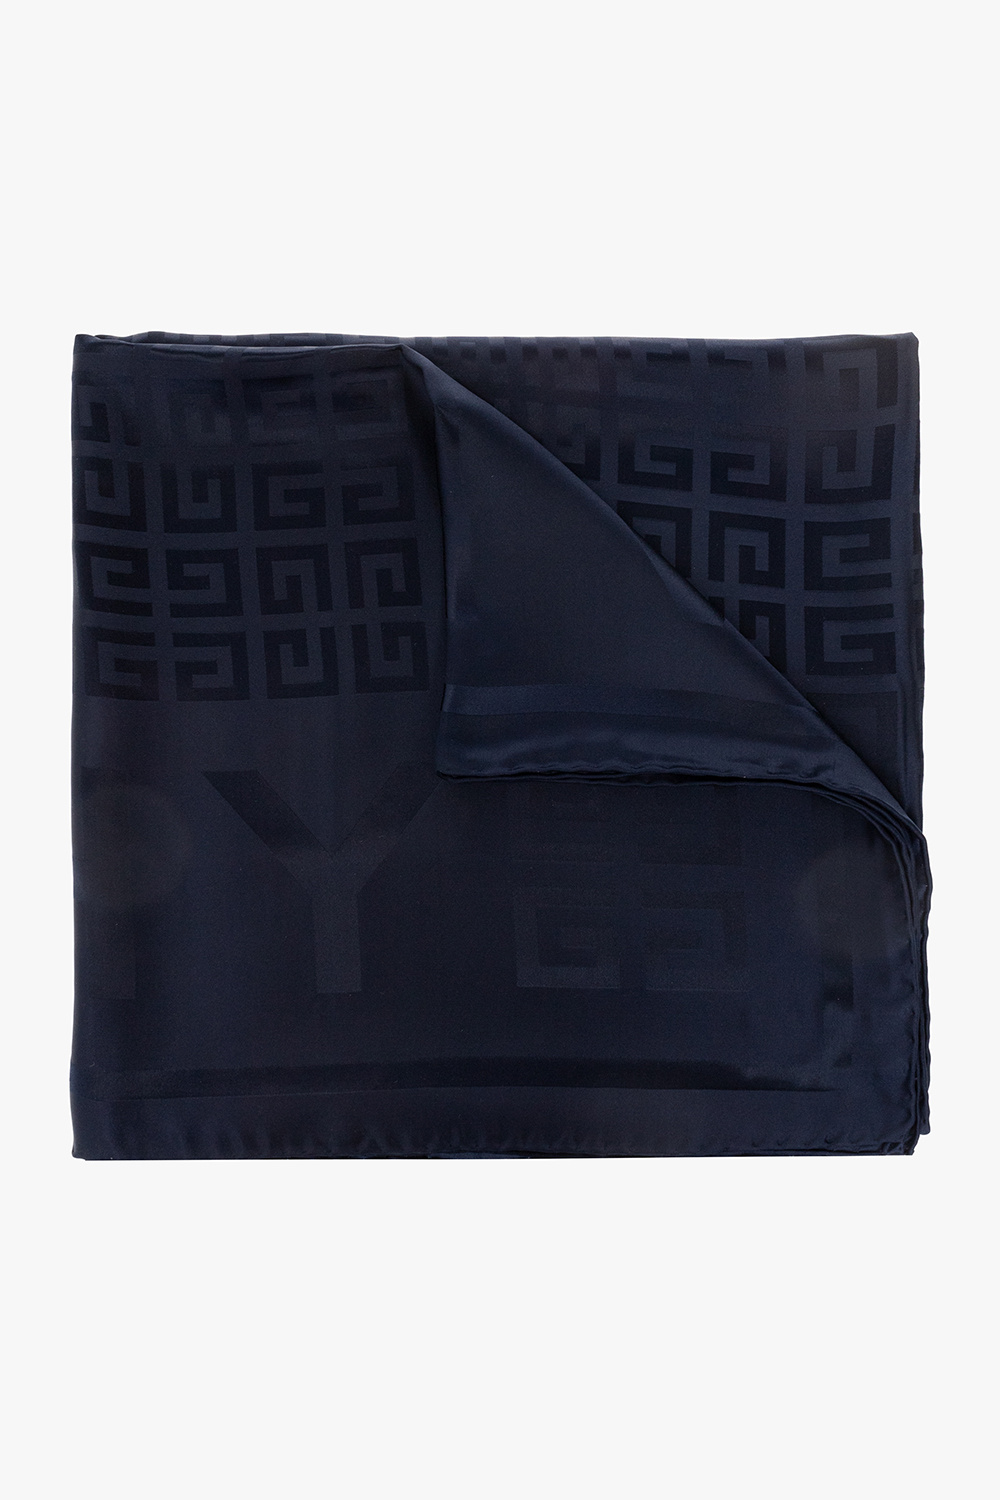 Givenchy givenchy x browns 50 antigona leather tote bag item